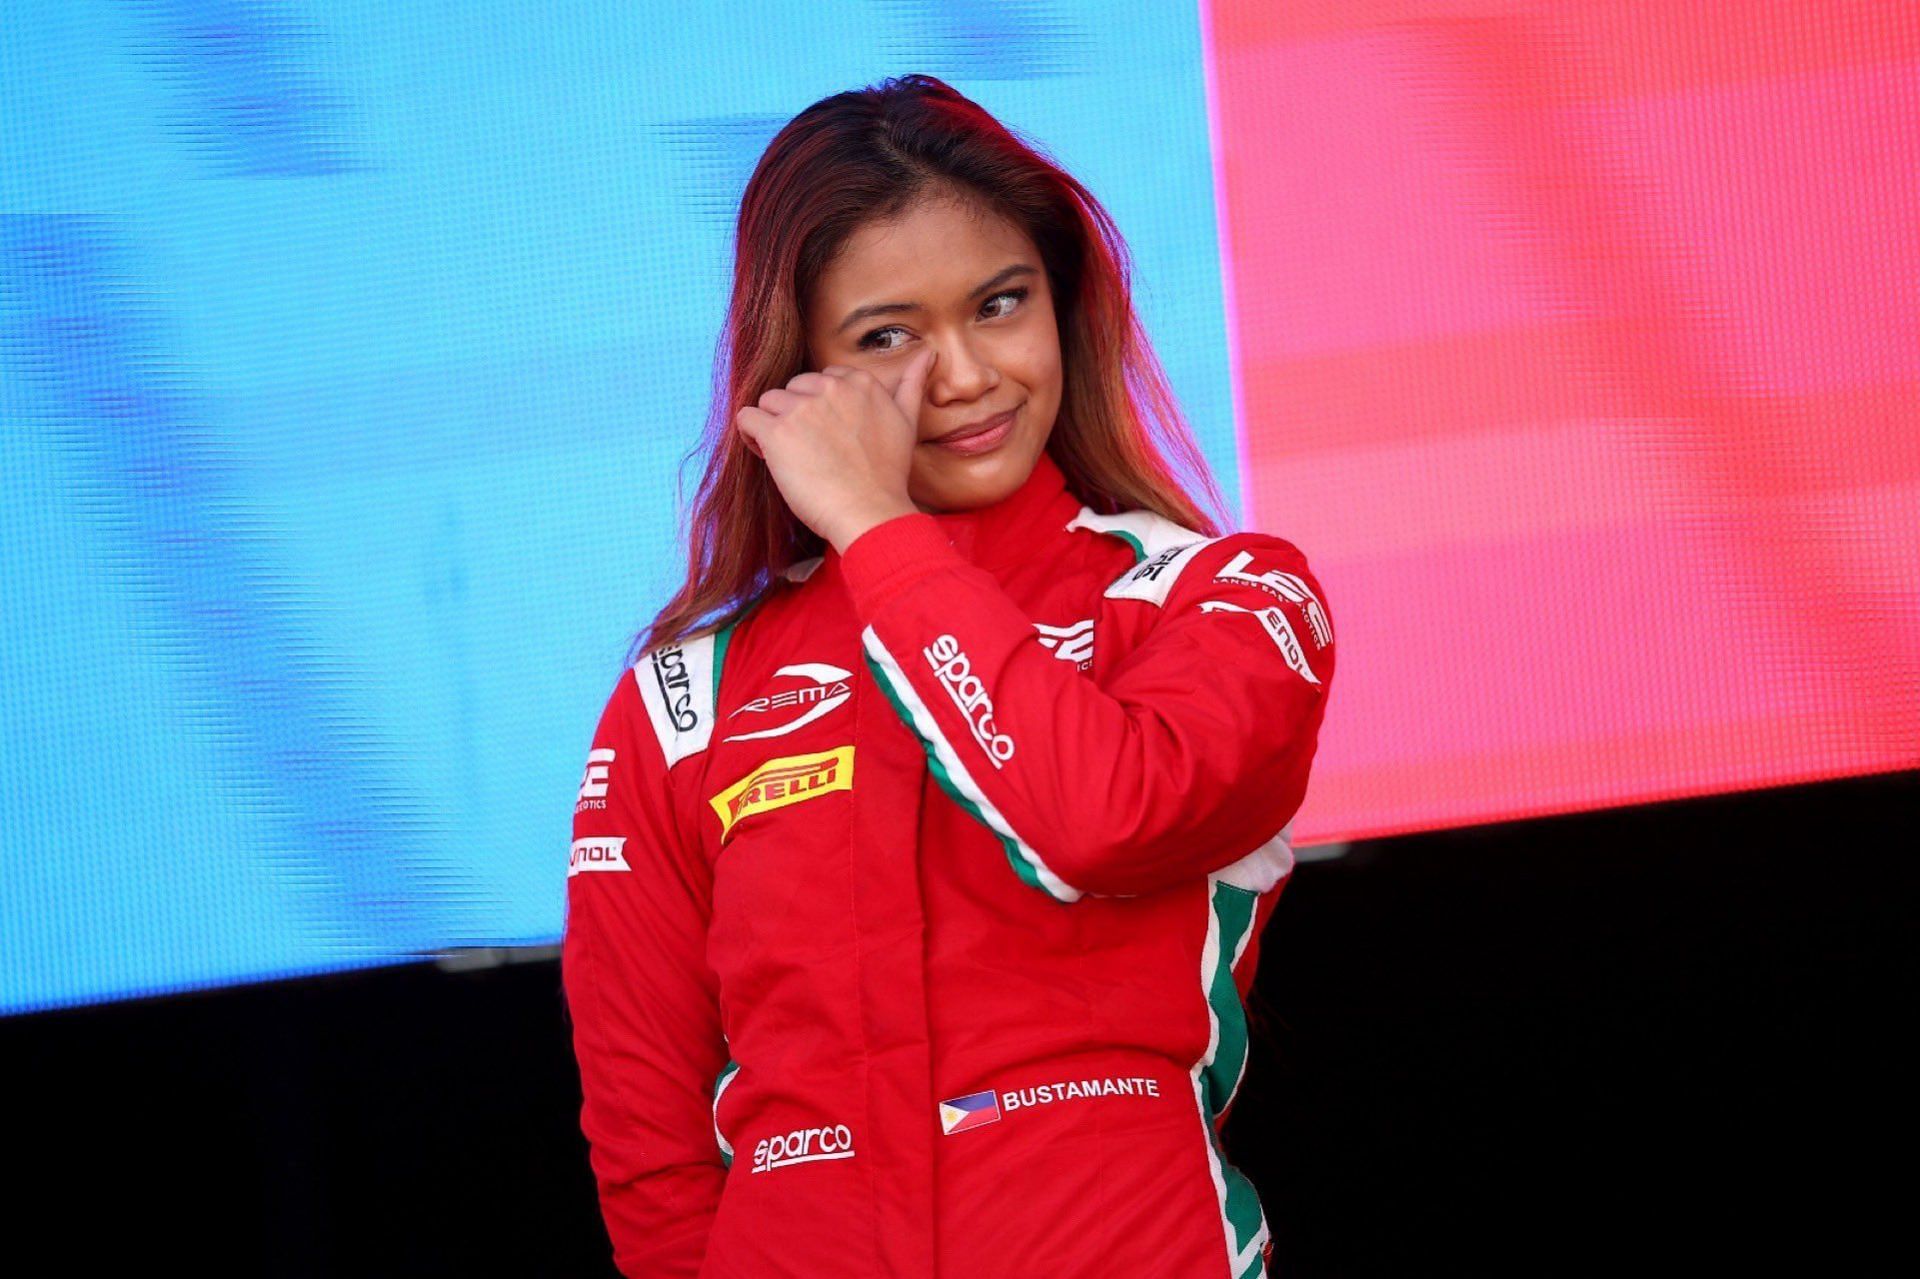 McLaren junior driver Bianca Bustamante has come under heavy scrutiny for her recent social media activity